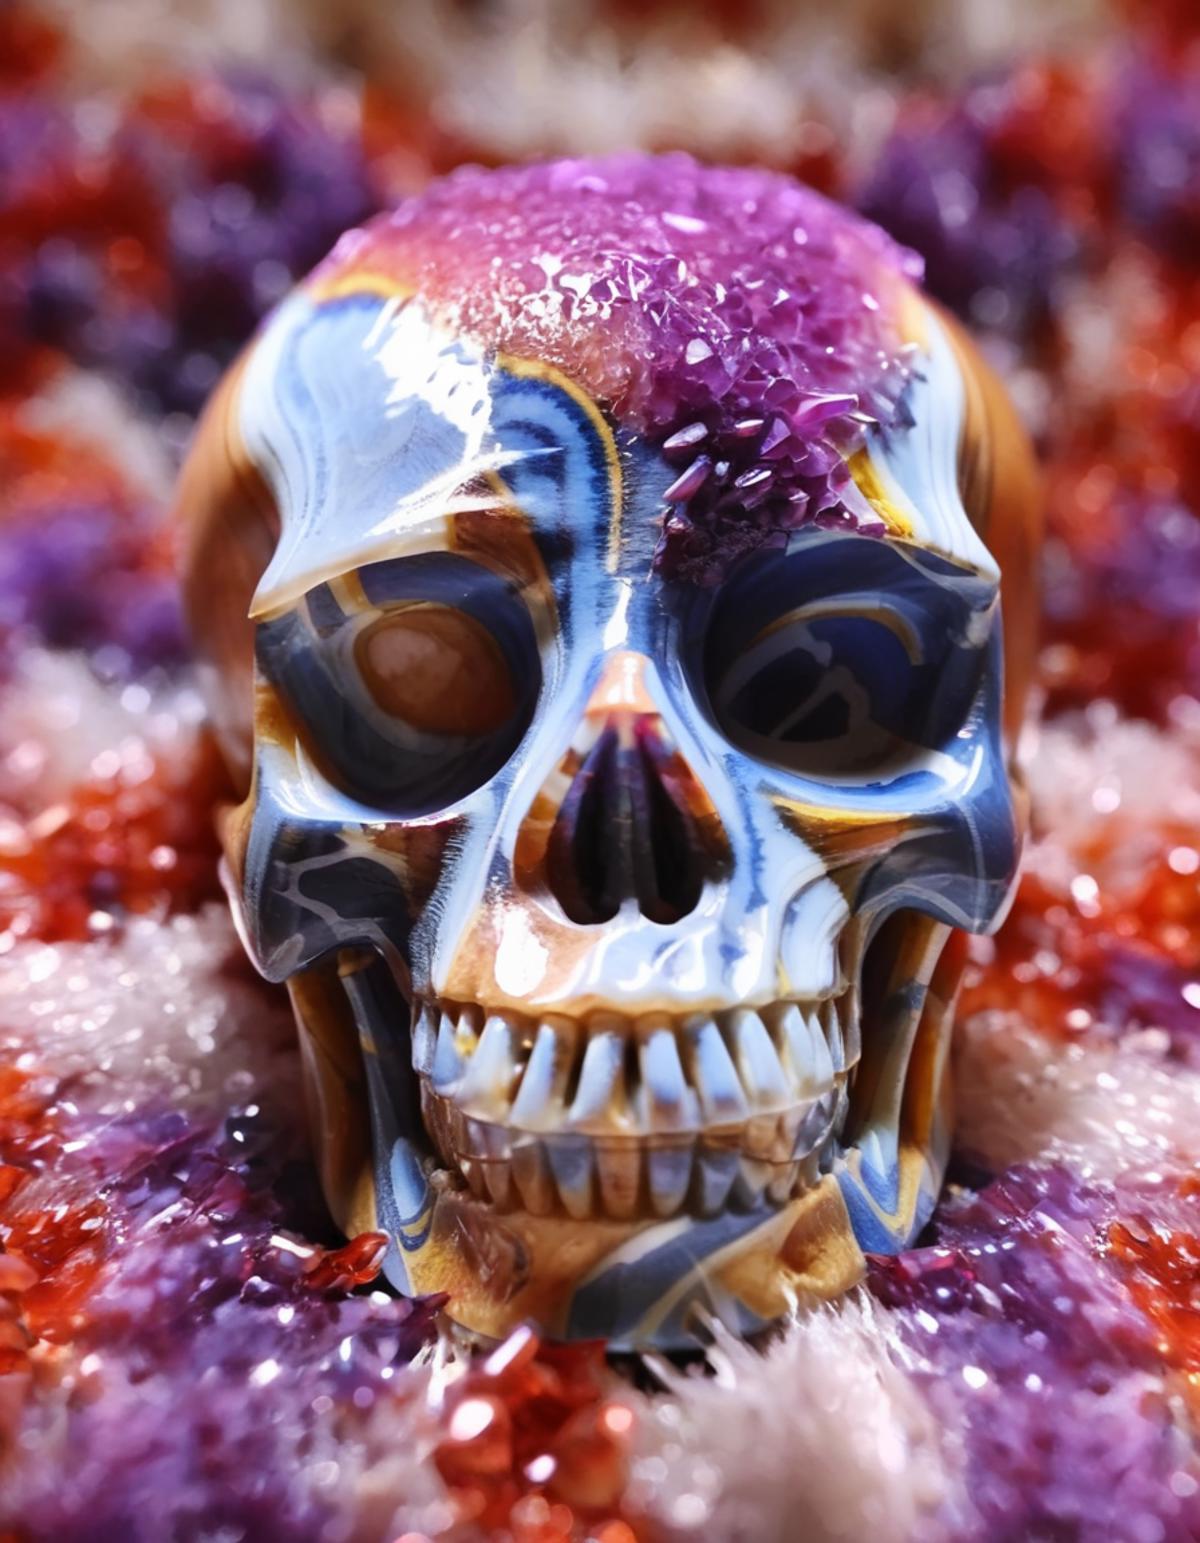 Crystal Skull XL image by ParanoidAmerican